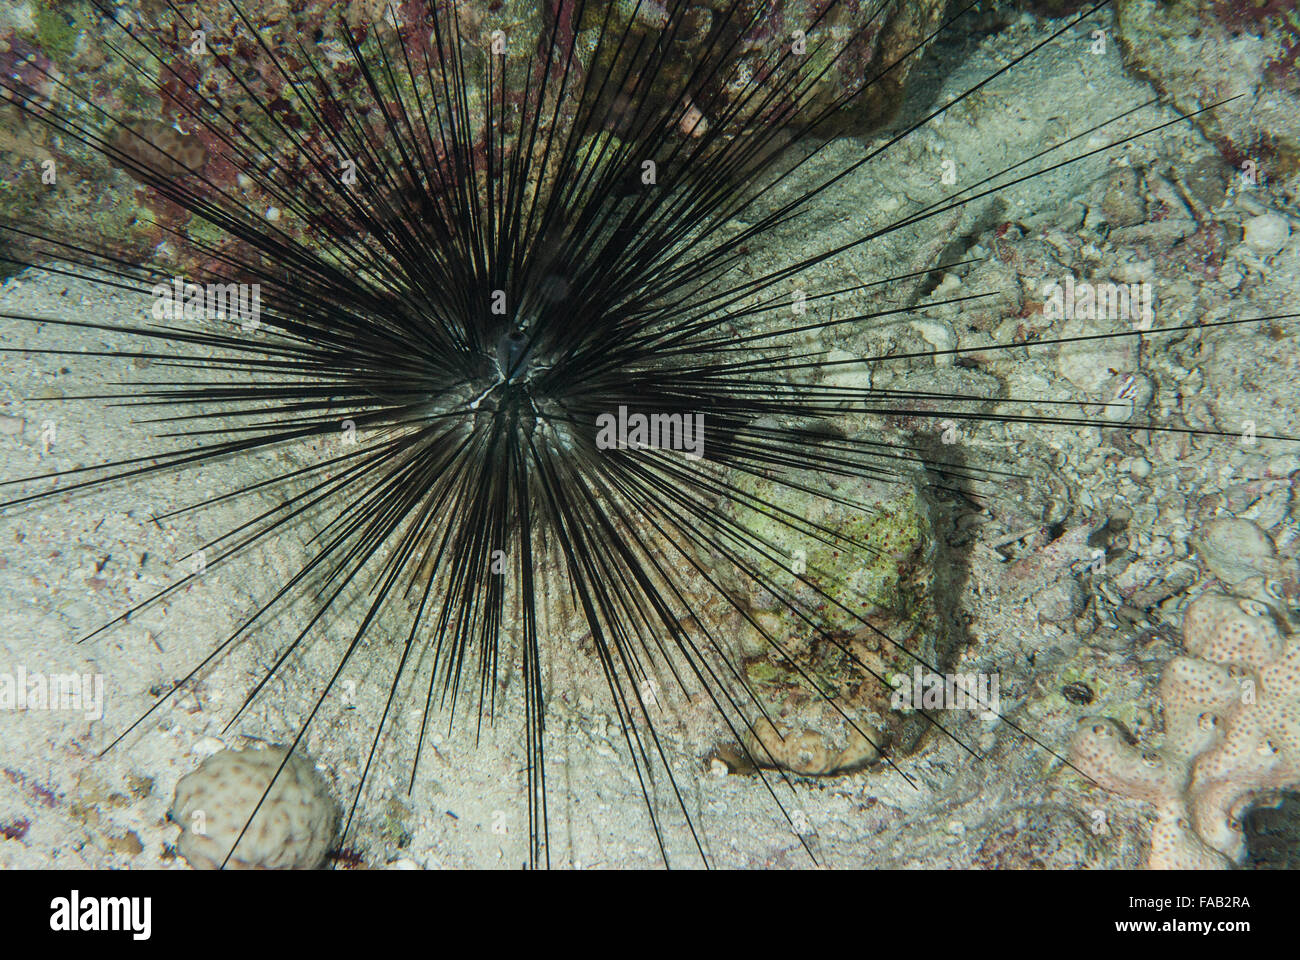 Long-spined sea urchin, Diadema paucispinum, Diadematidae., Sharm el Sheikh, Red Sea, Egypt Stock Photo